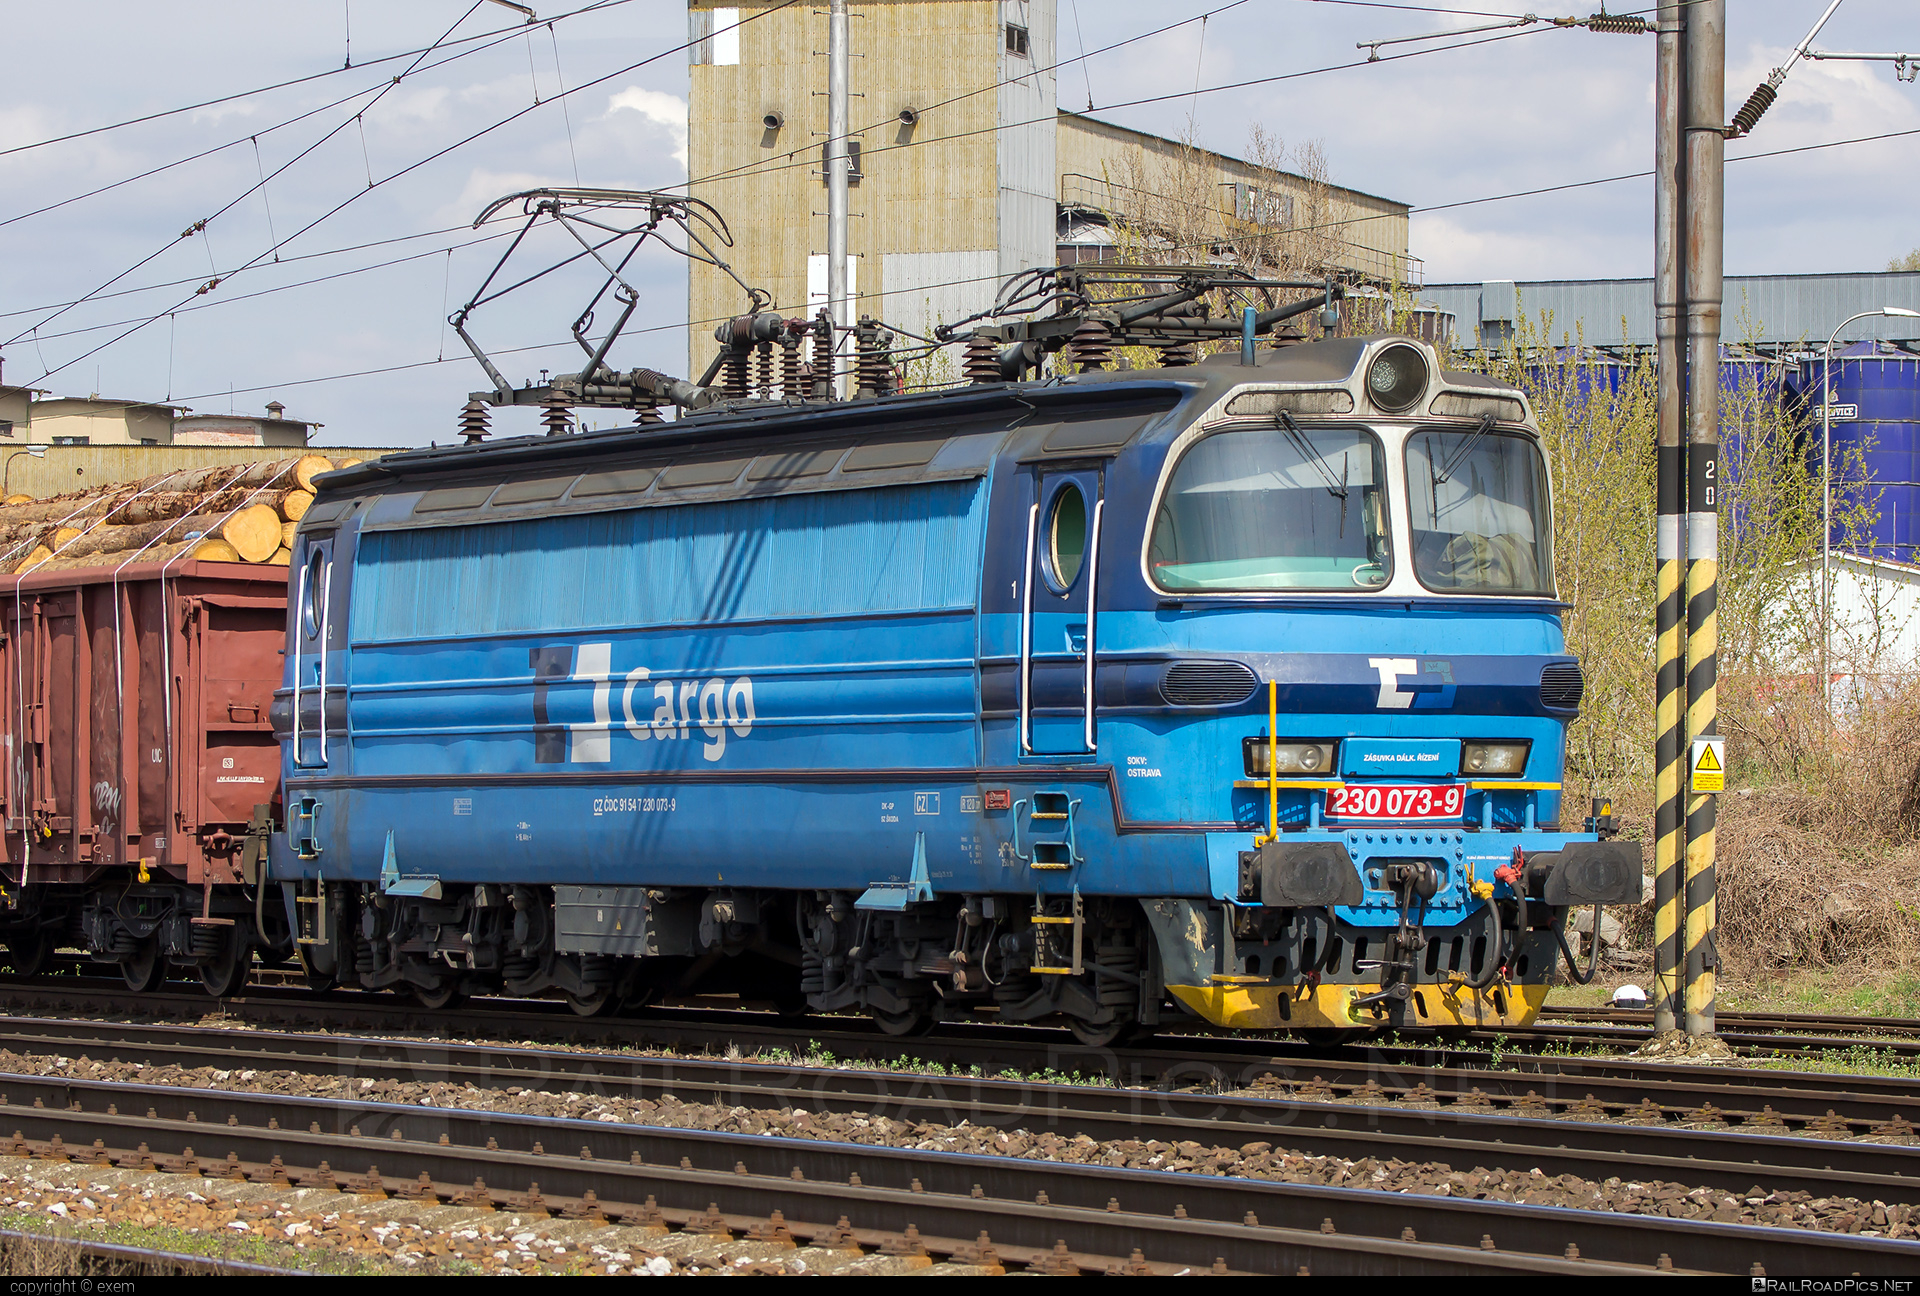 Škoda 47E - 230 073-9 operated by ČD Cargo, a.s. #cdcargo #laminatka #locomotive240 #openwagon #skoda #skoda47e